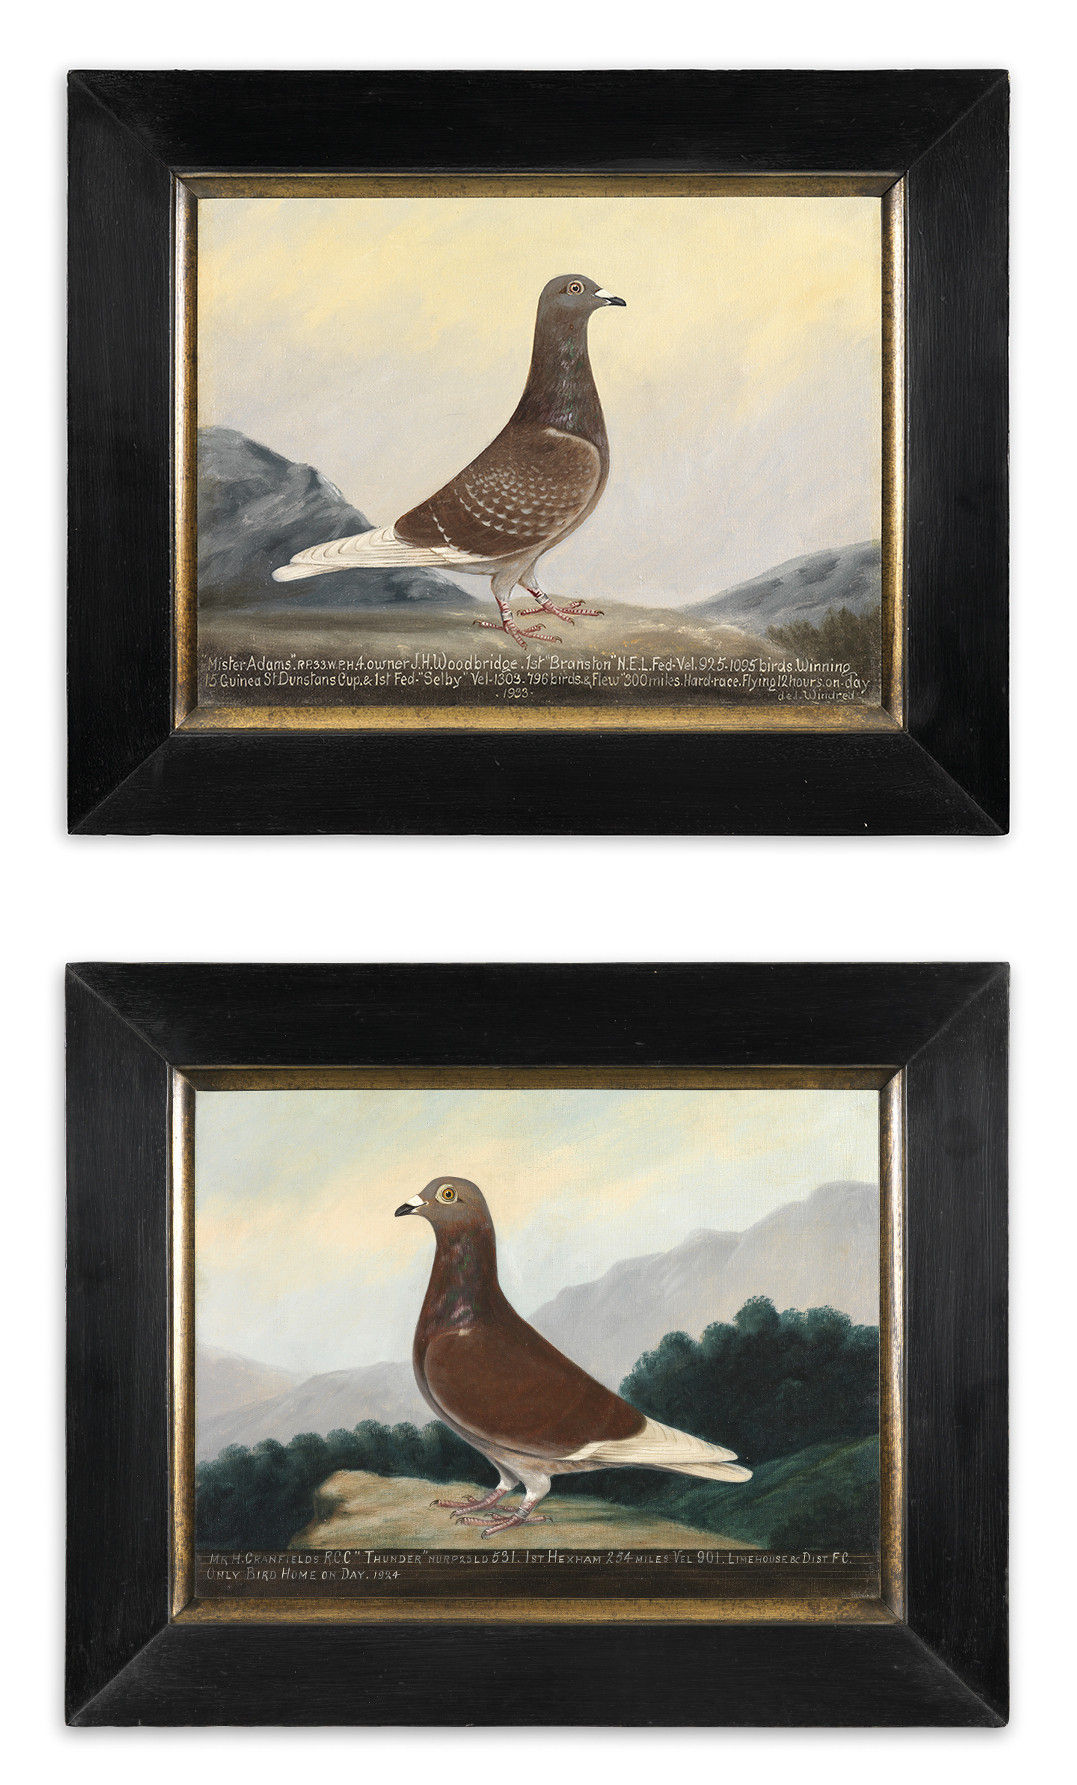 Two Racing Pigeon Portraits "Mr Adams" and "Thunder"